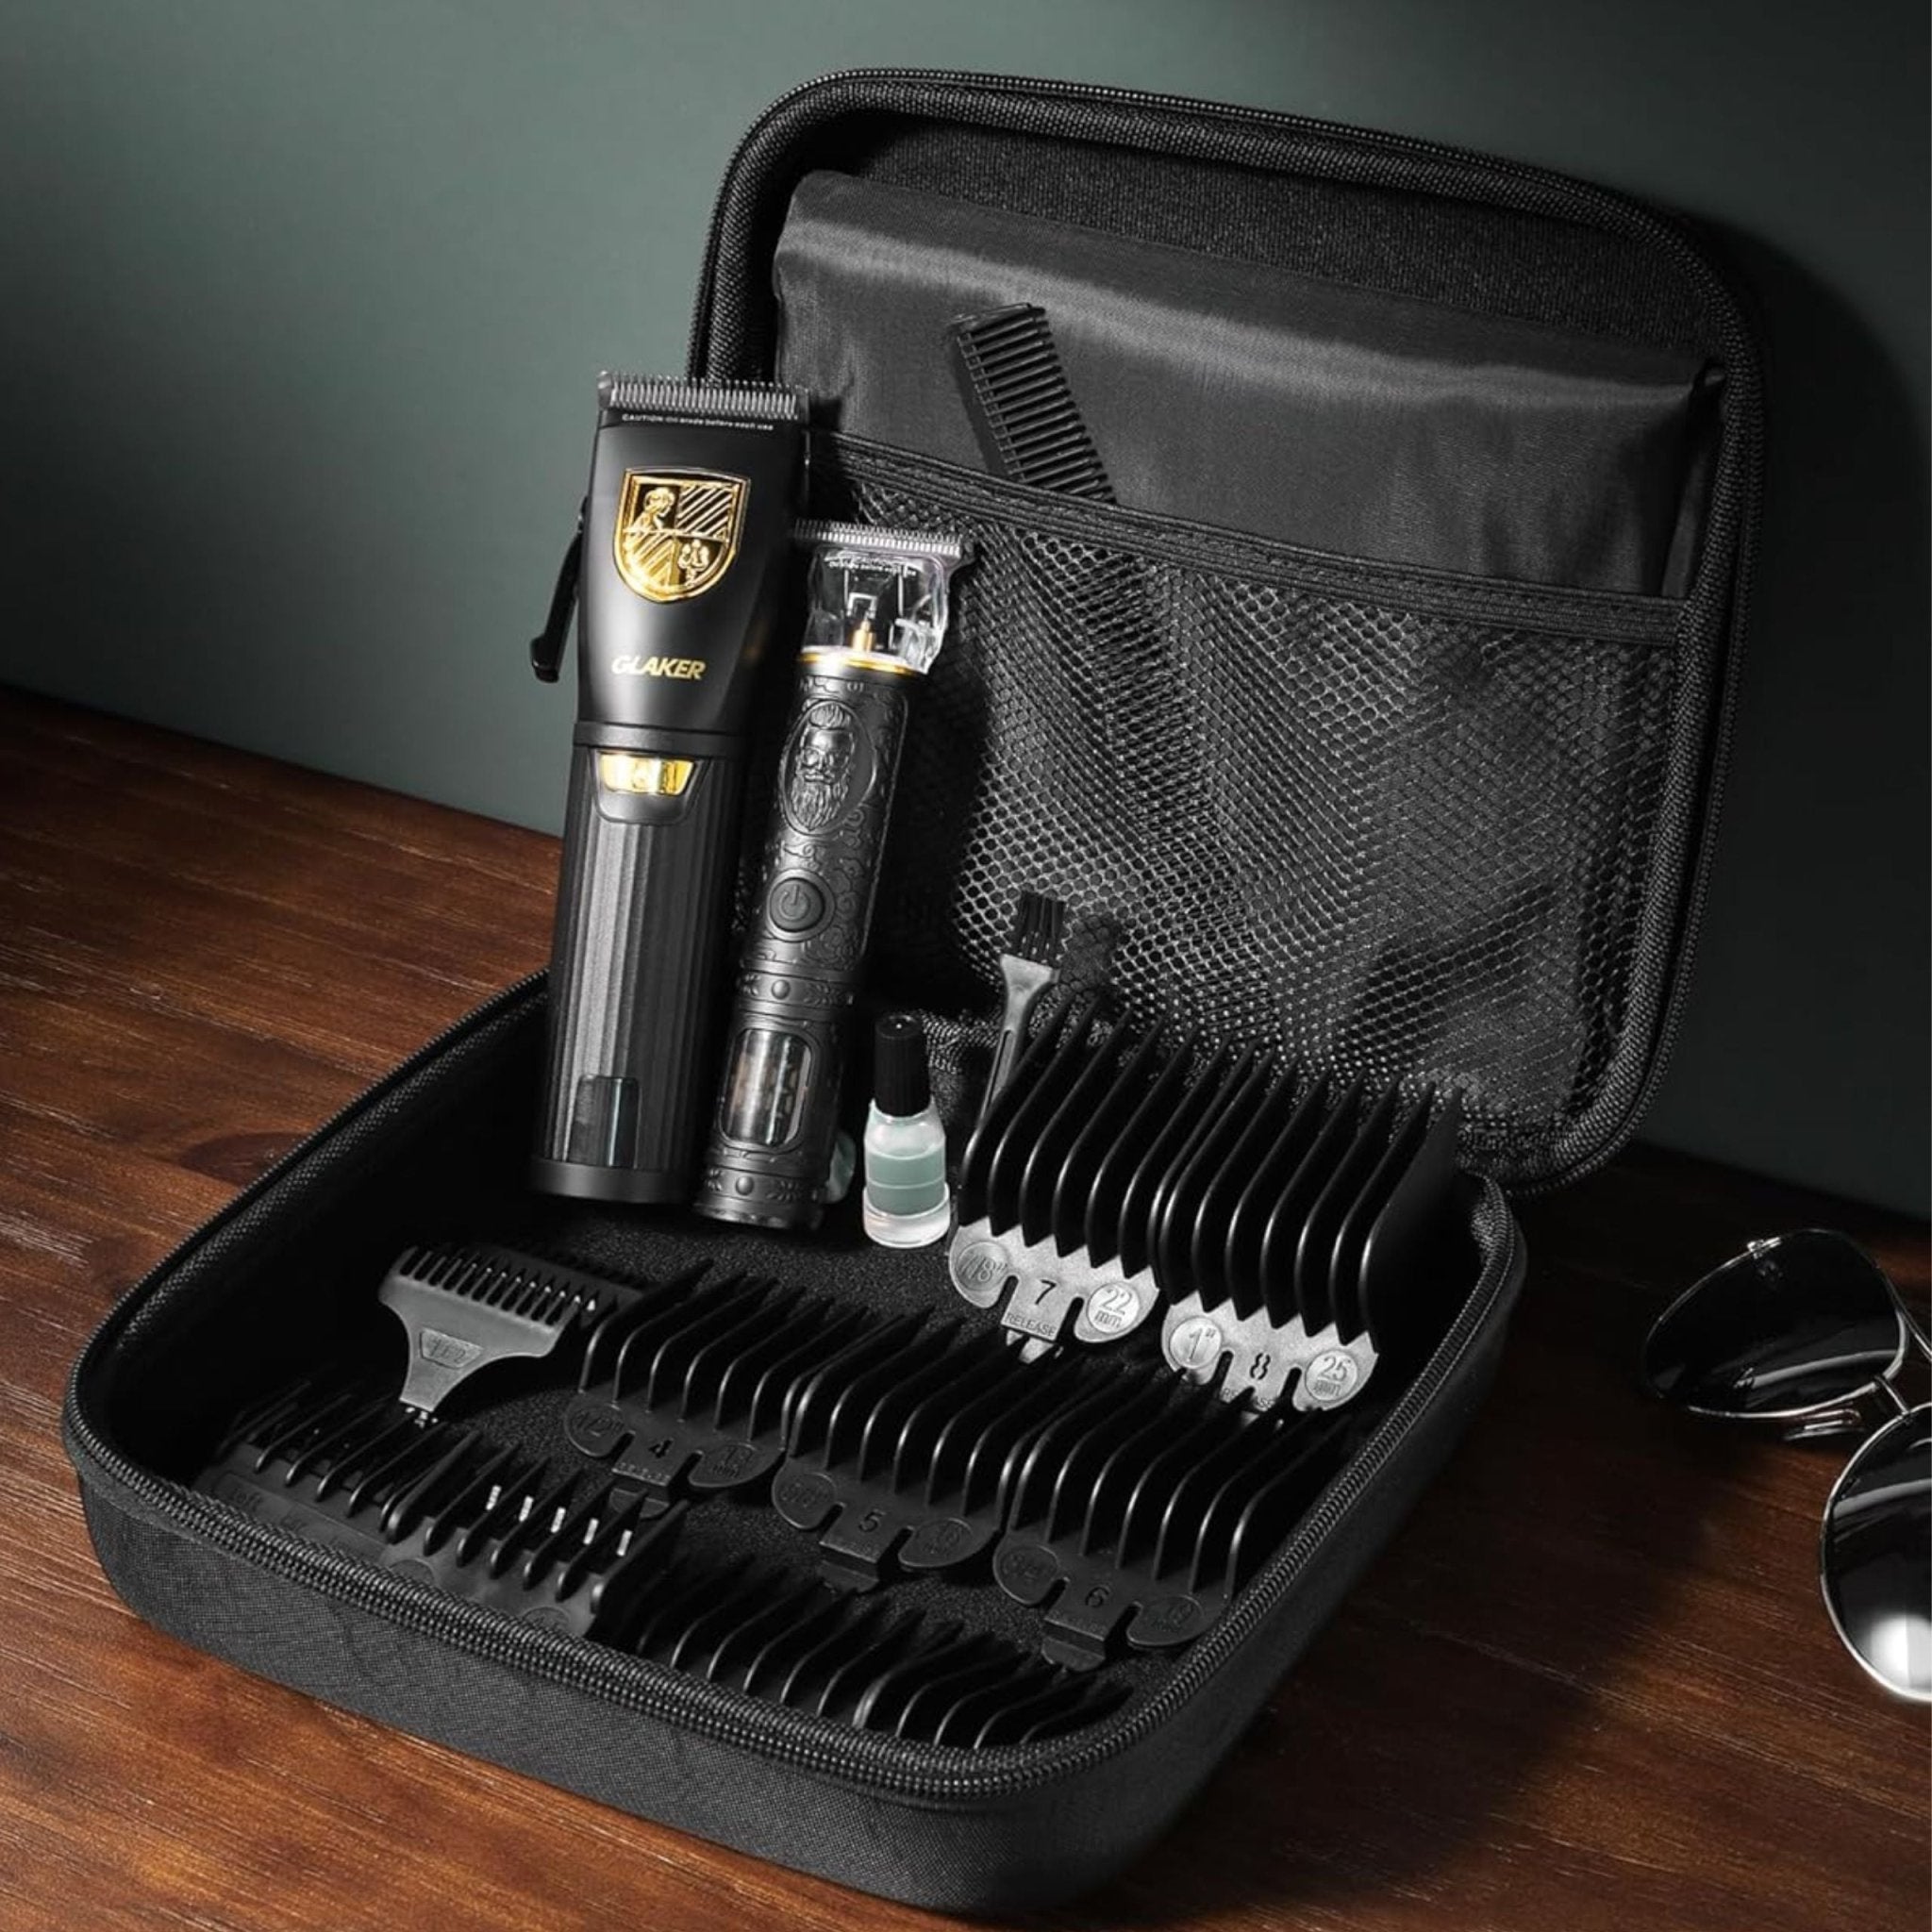 Glaker Professional Hair Clipper and Outline Trimmer Kit 2 - Black Gold